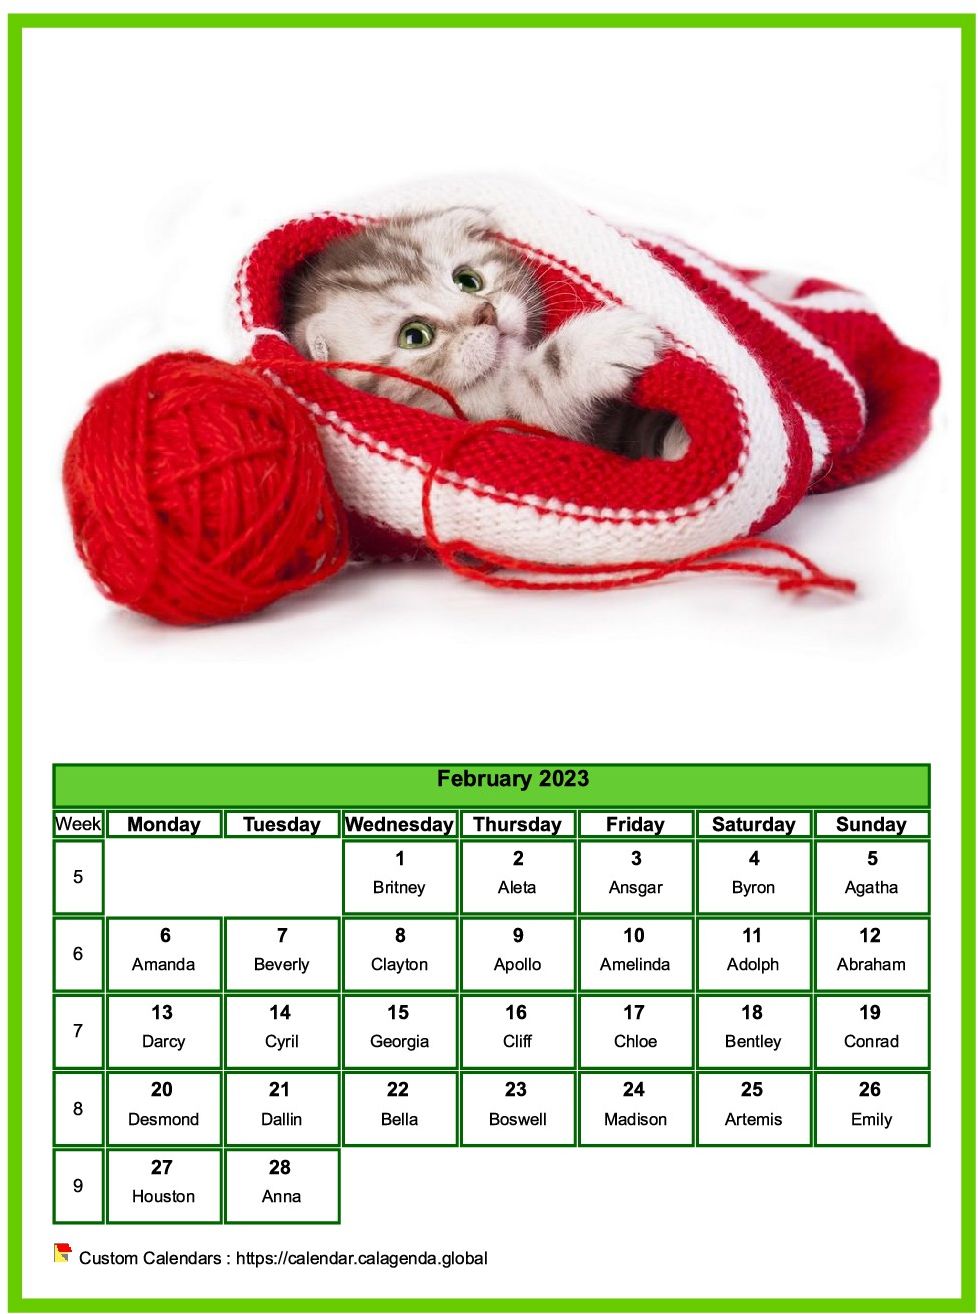 Calendar February 2023 cats